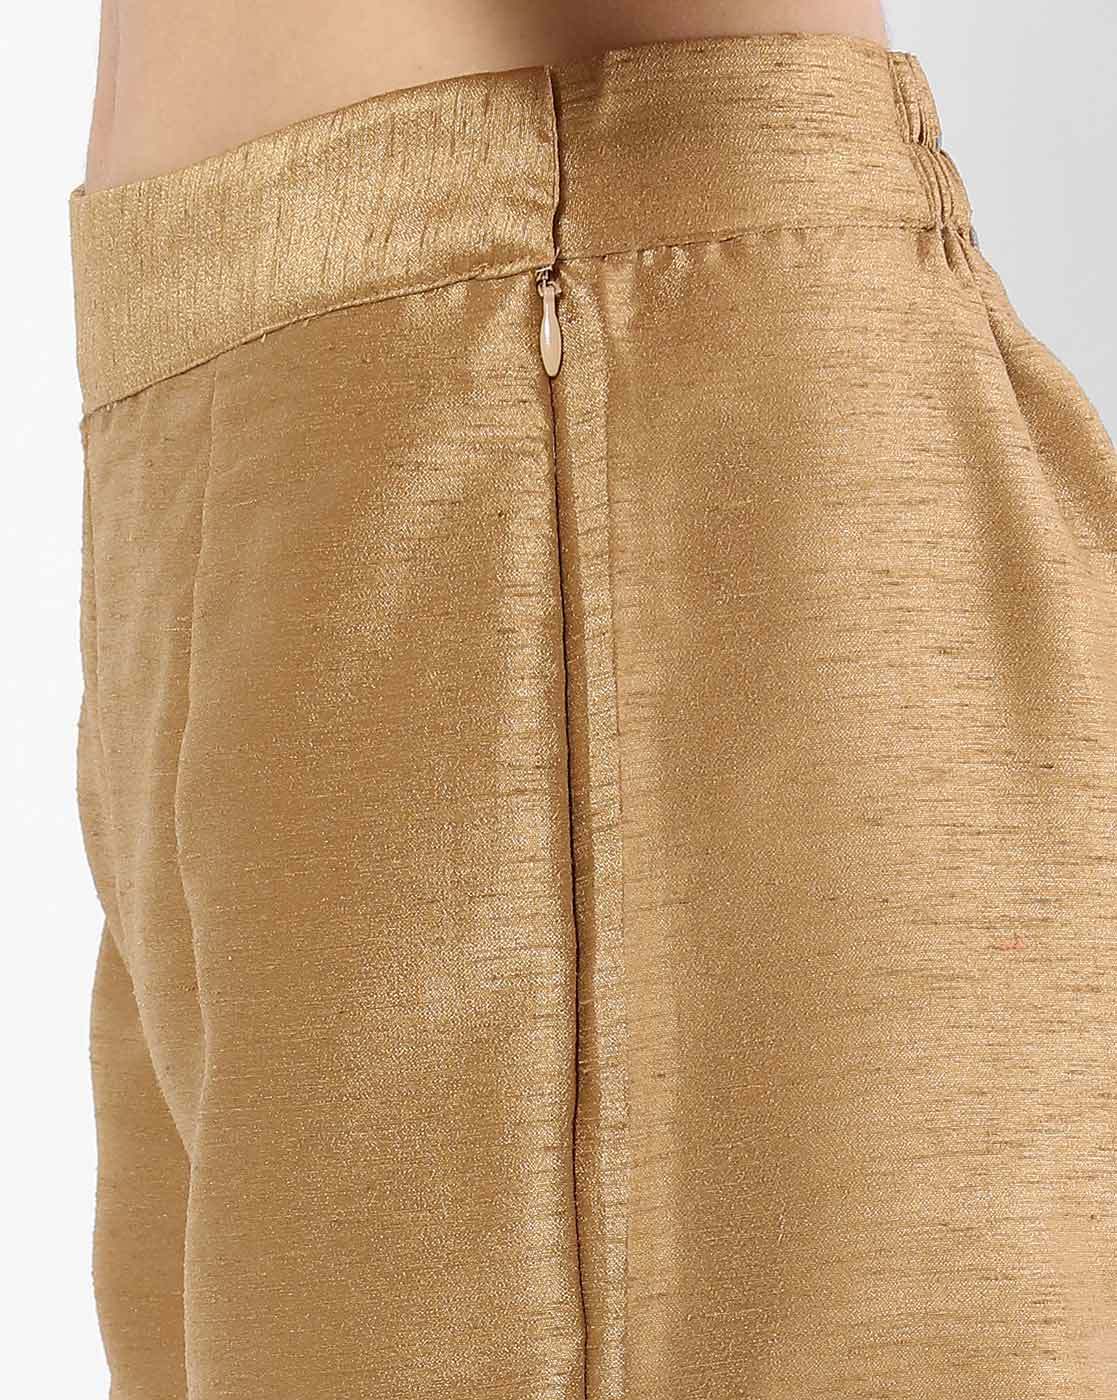 Buy Gold Sequin Pants Sequin Pants Gold Pants Gold Glitter Online in India  - Etsy